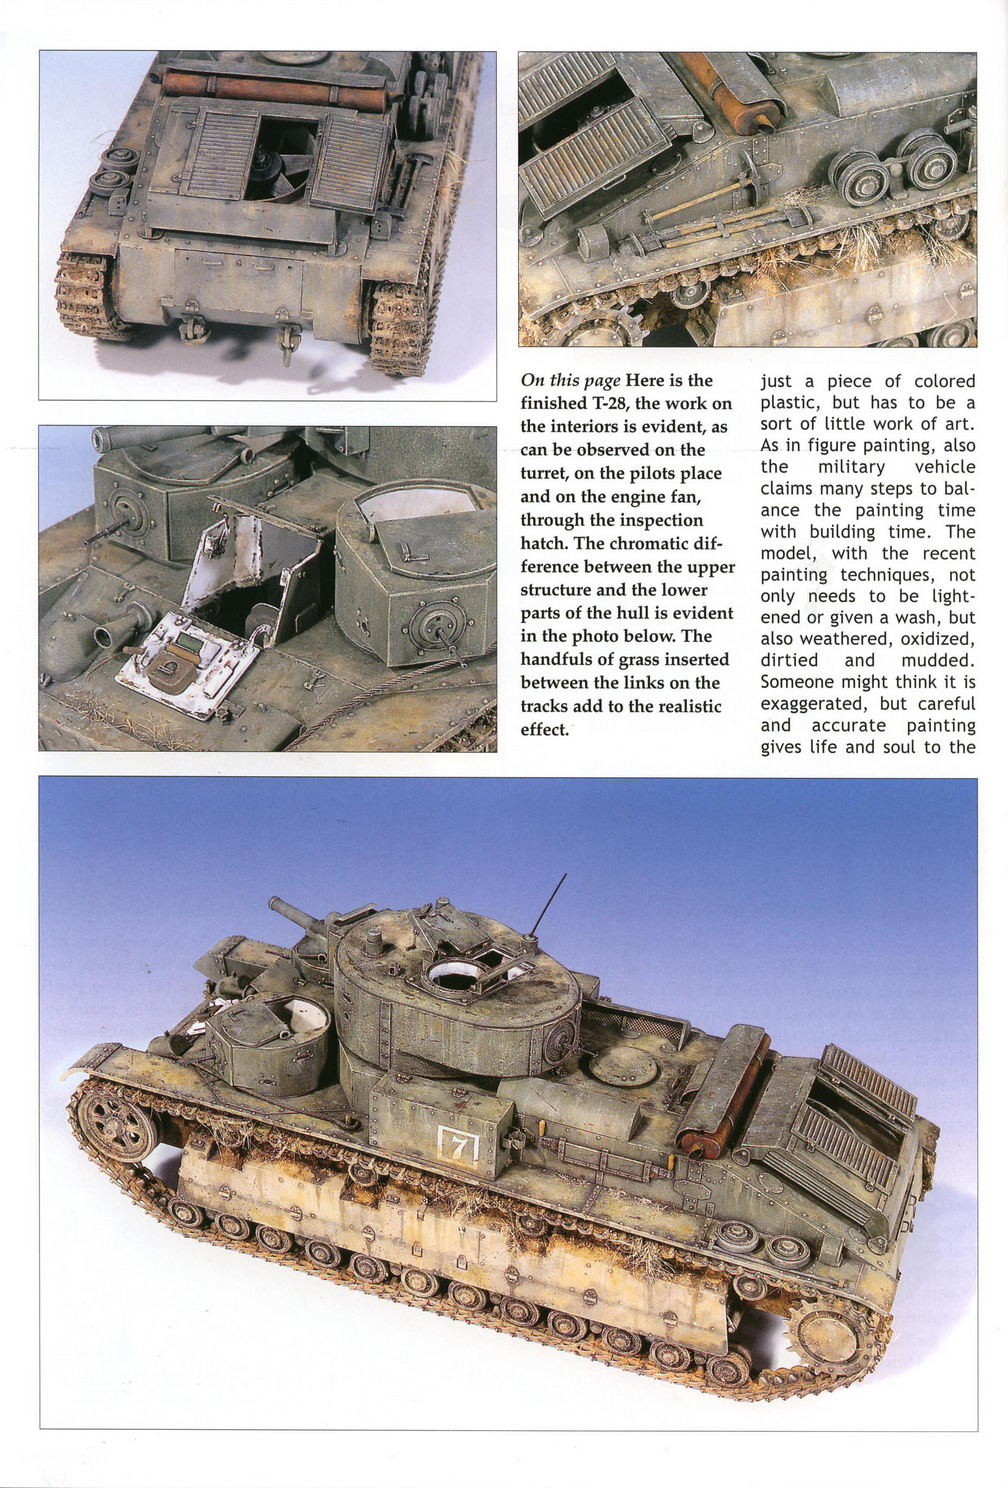 Painting & Weathering Military Vehicles (67).JPG